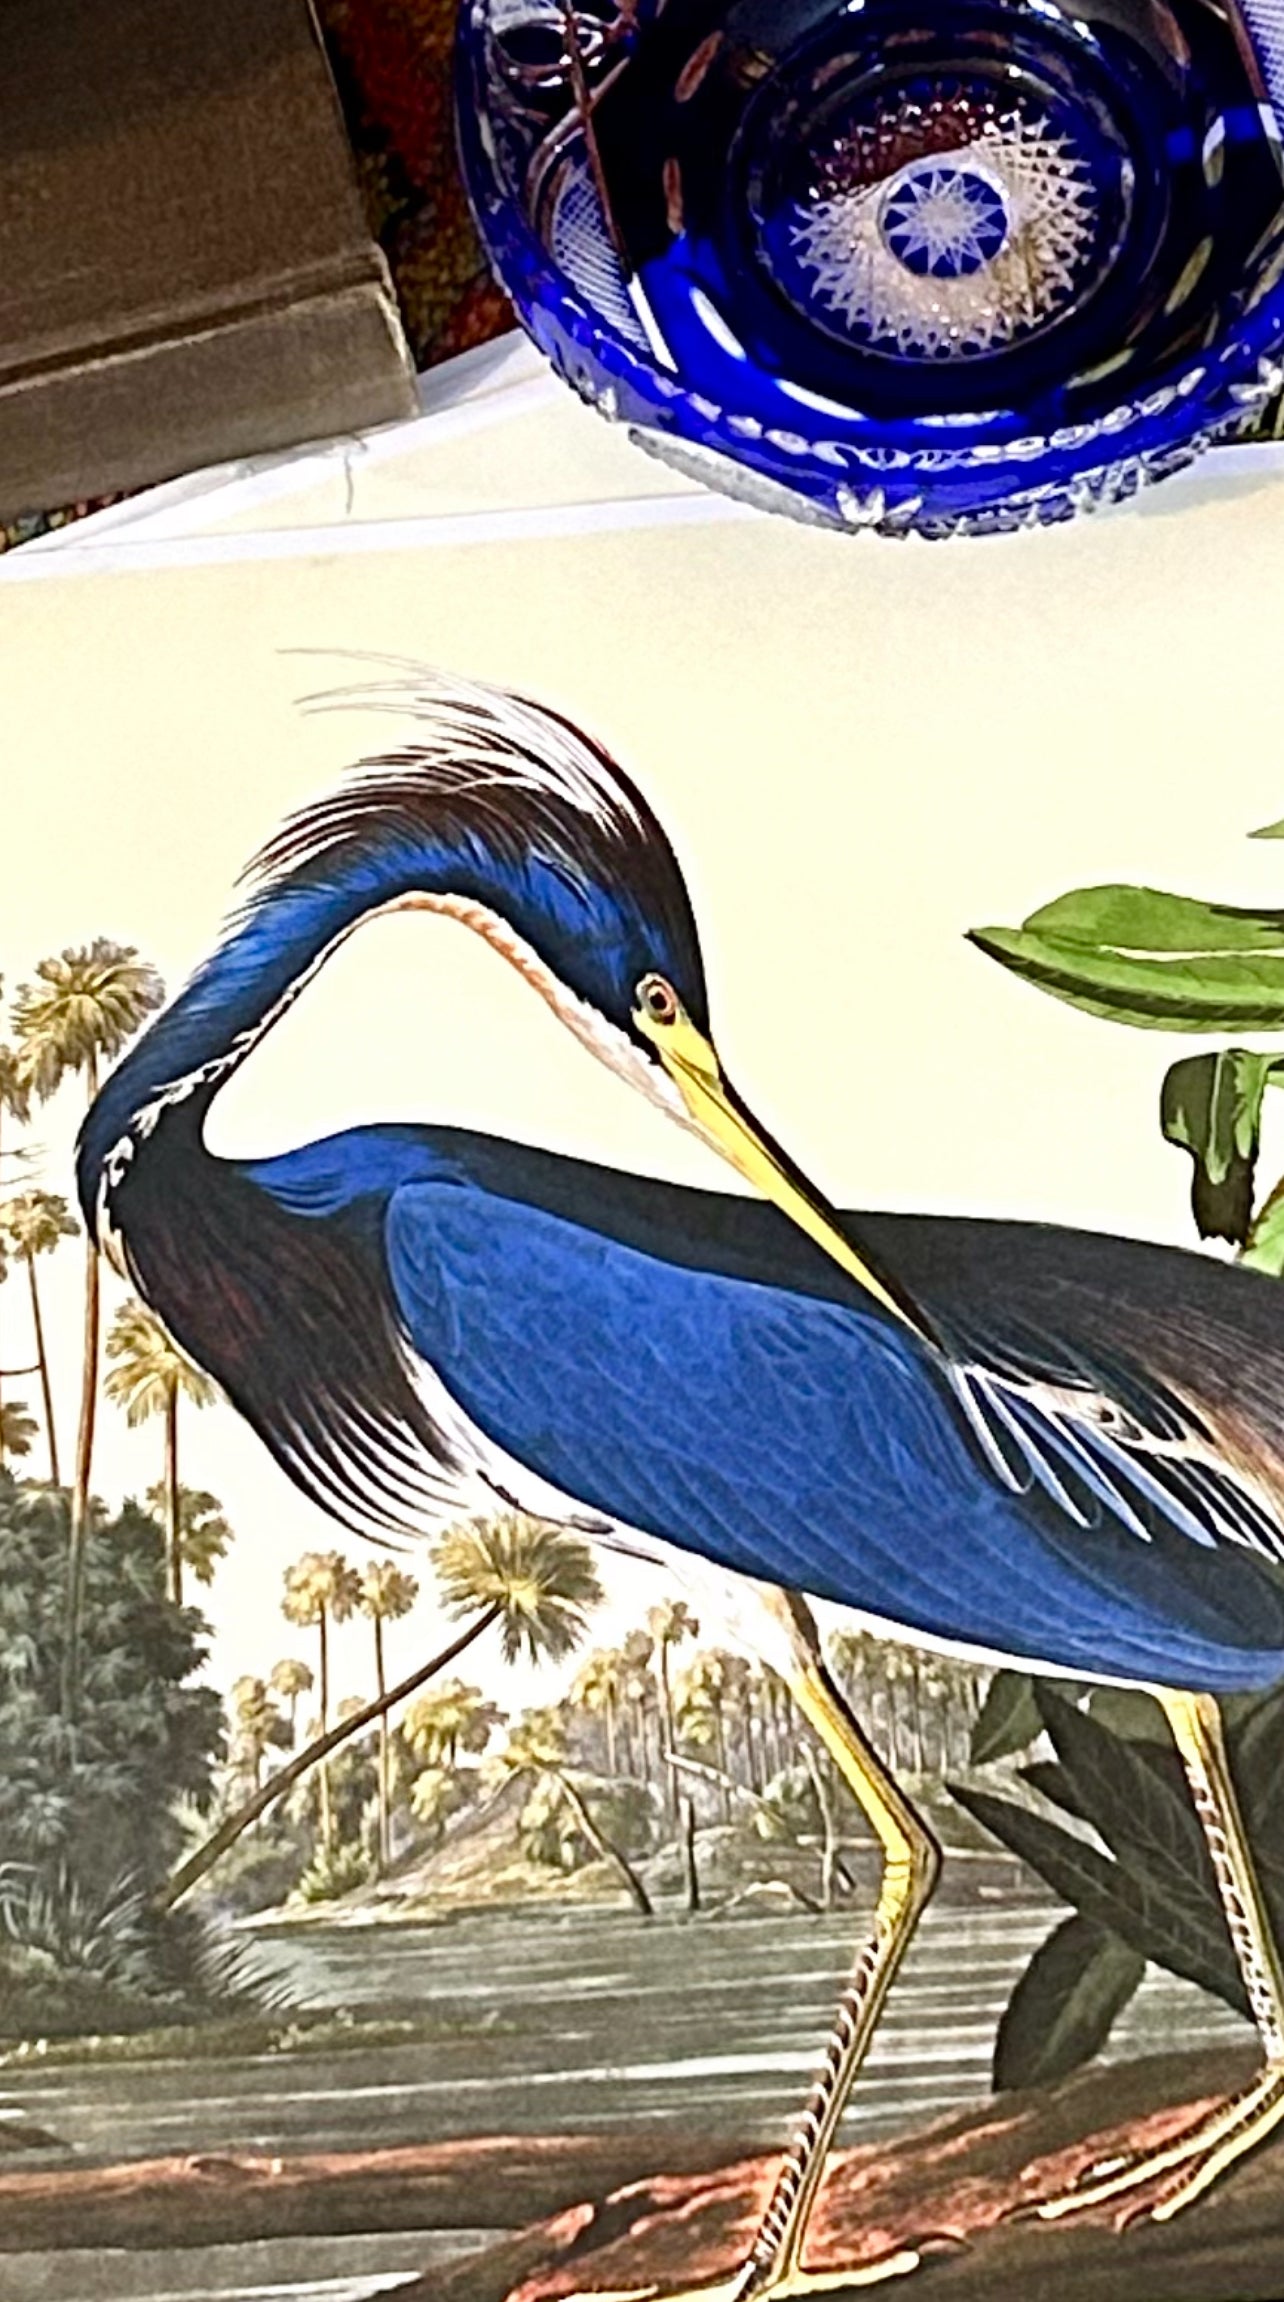 Set of 4 bold bird Audubon style color wall prints